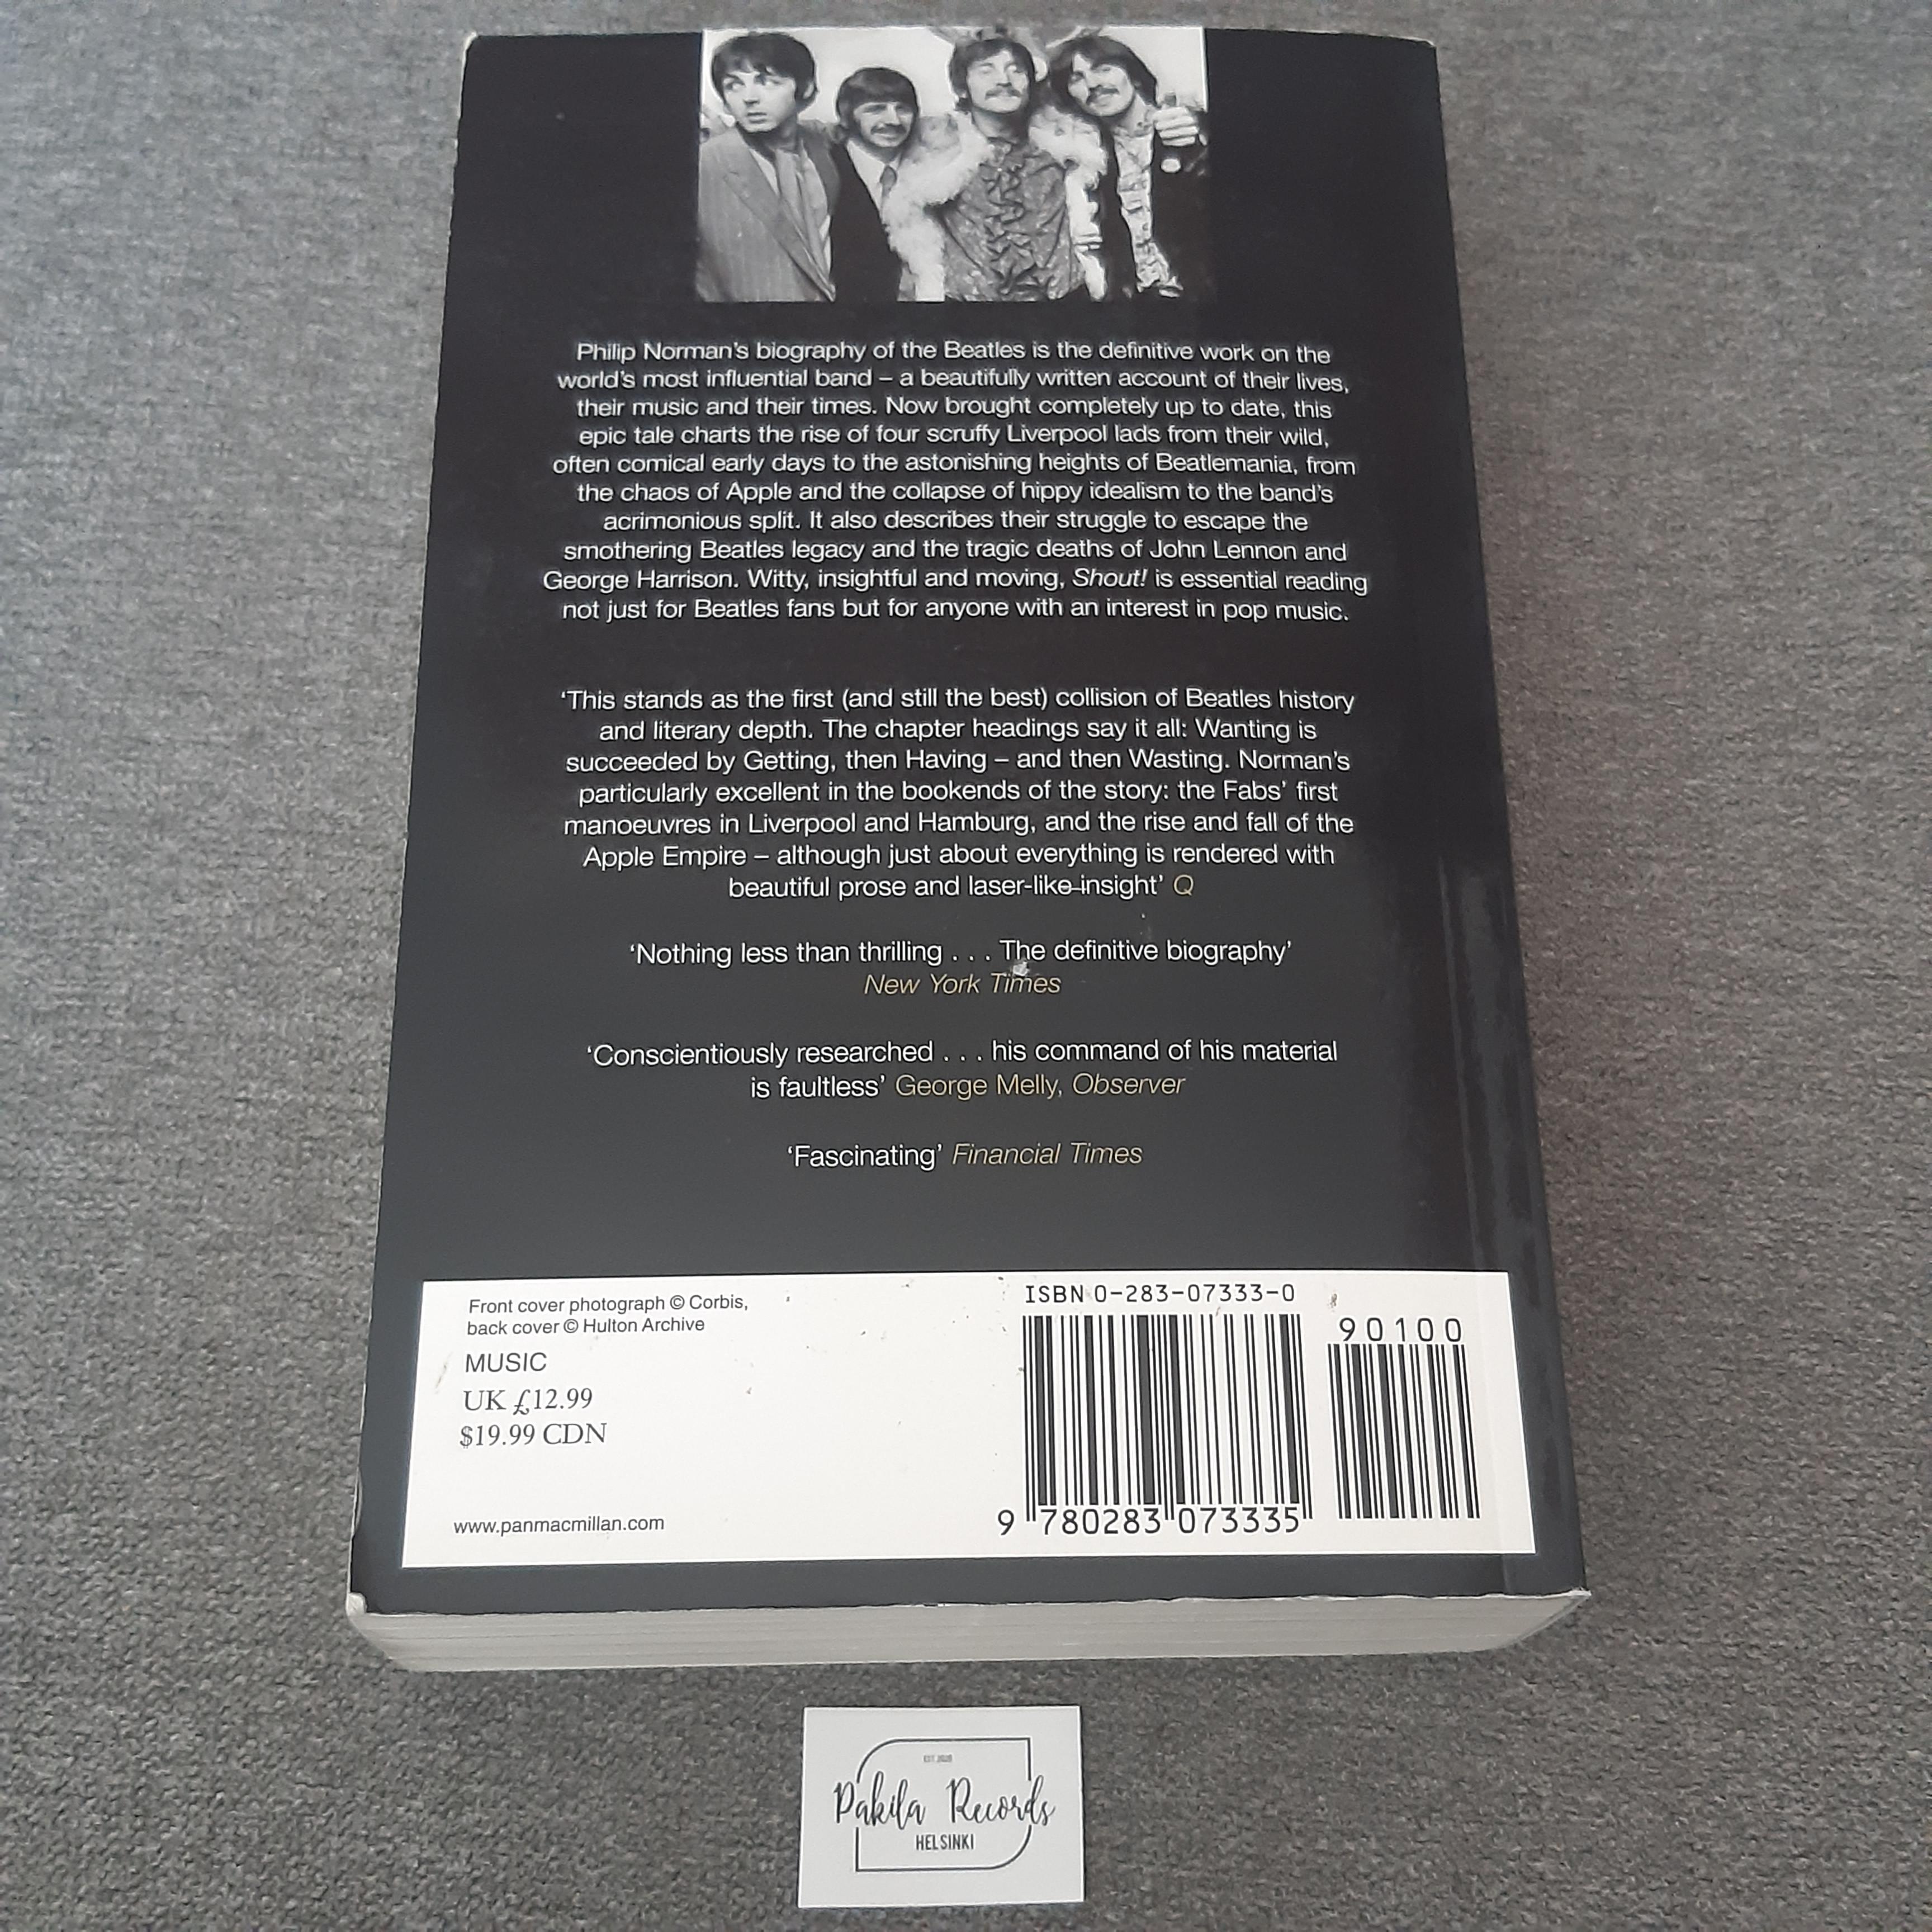 Shout! The True Story Of The Beatles - Philip Norman - Kirja (käytetty)